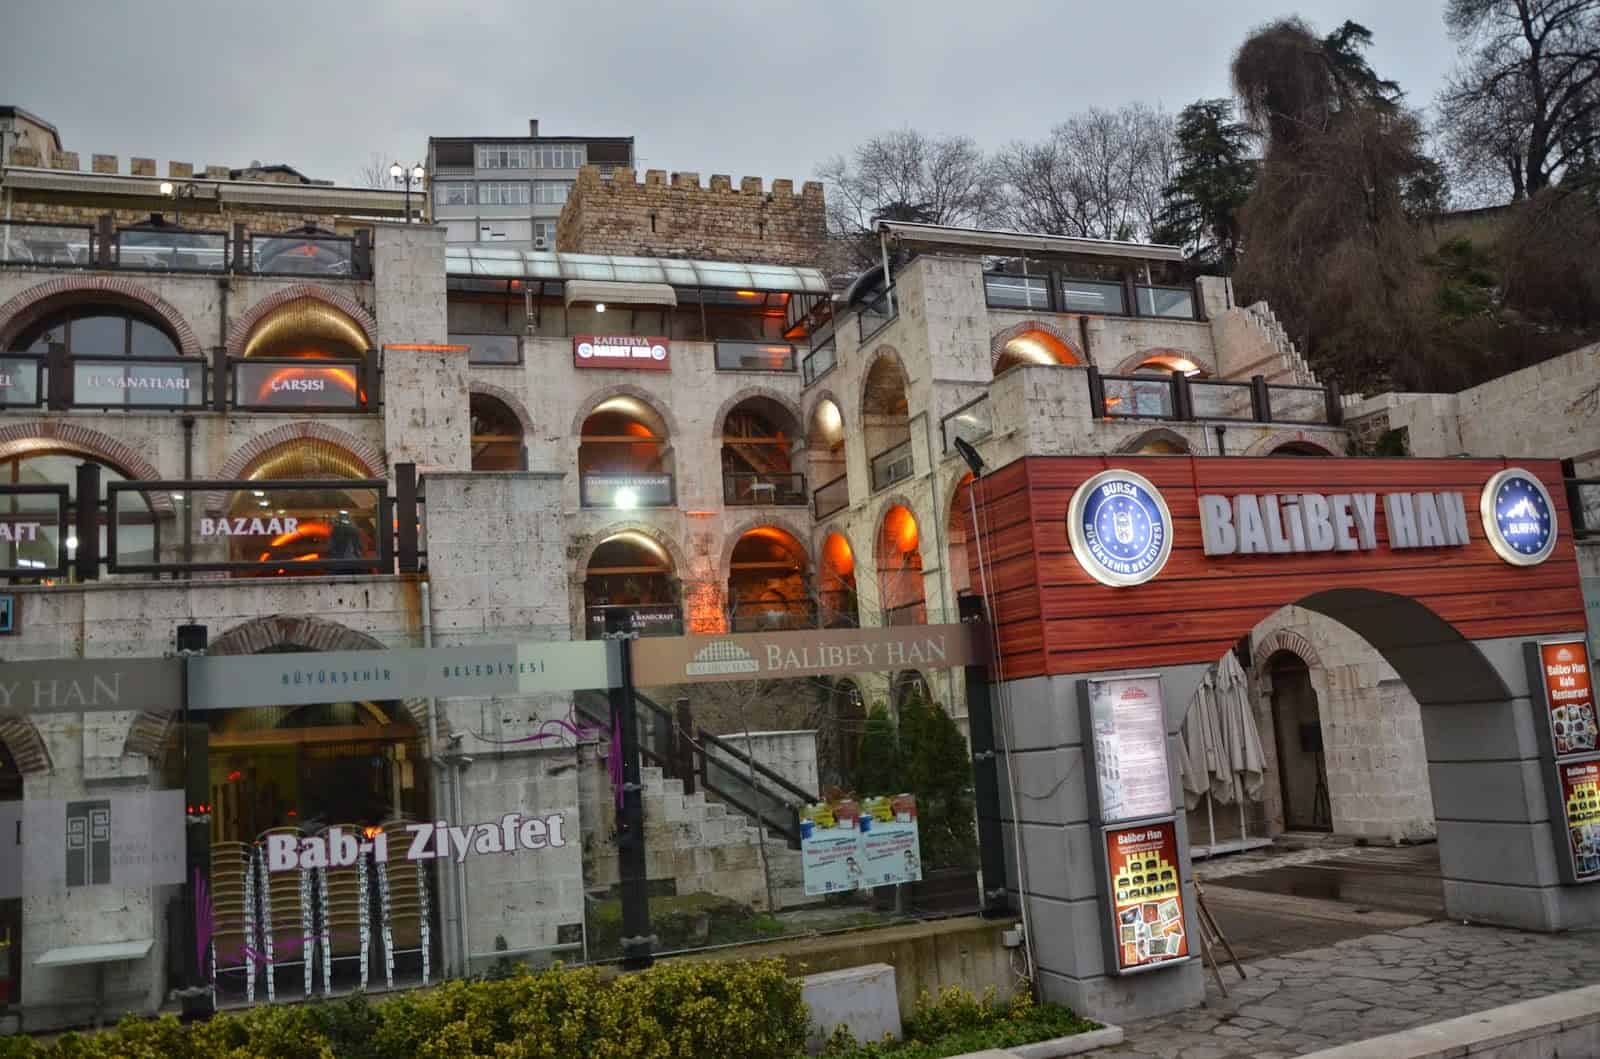 Balibey Han in Bursa, Turkey